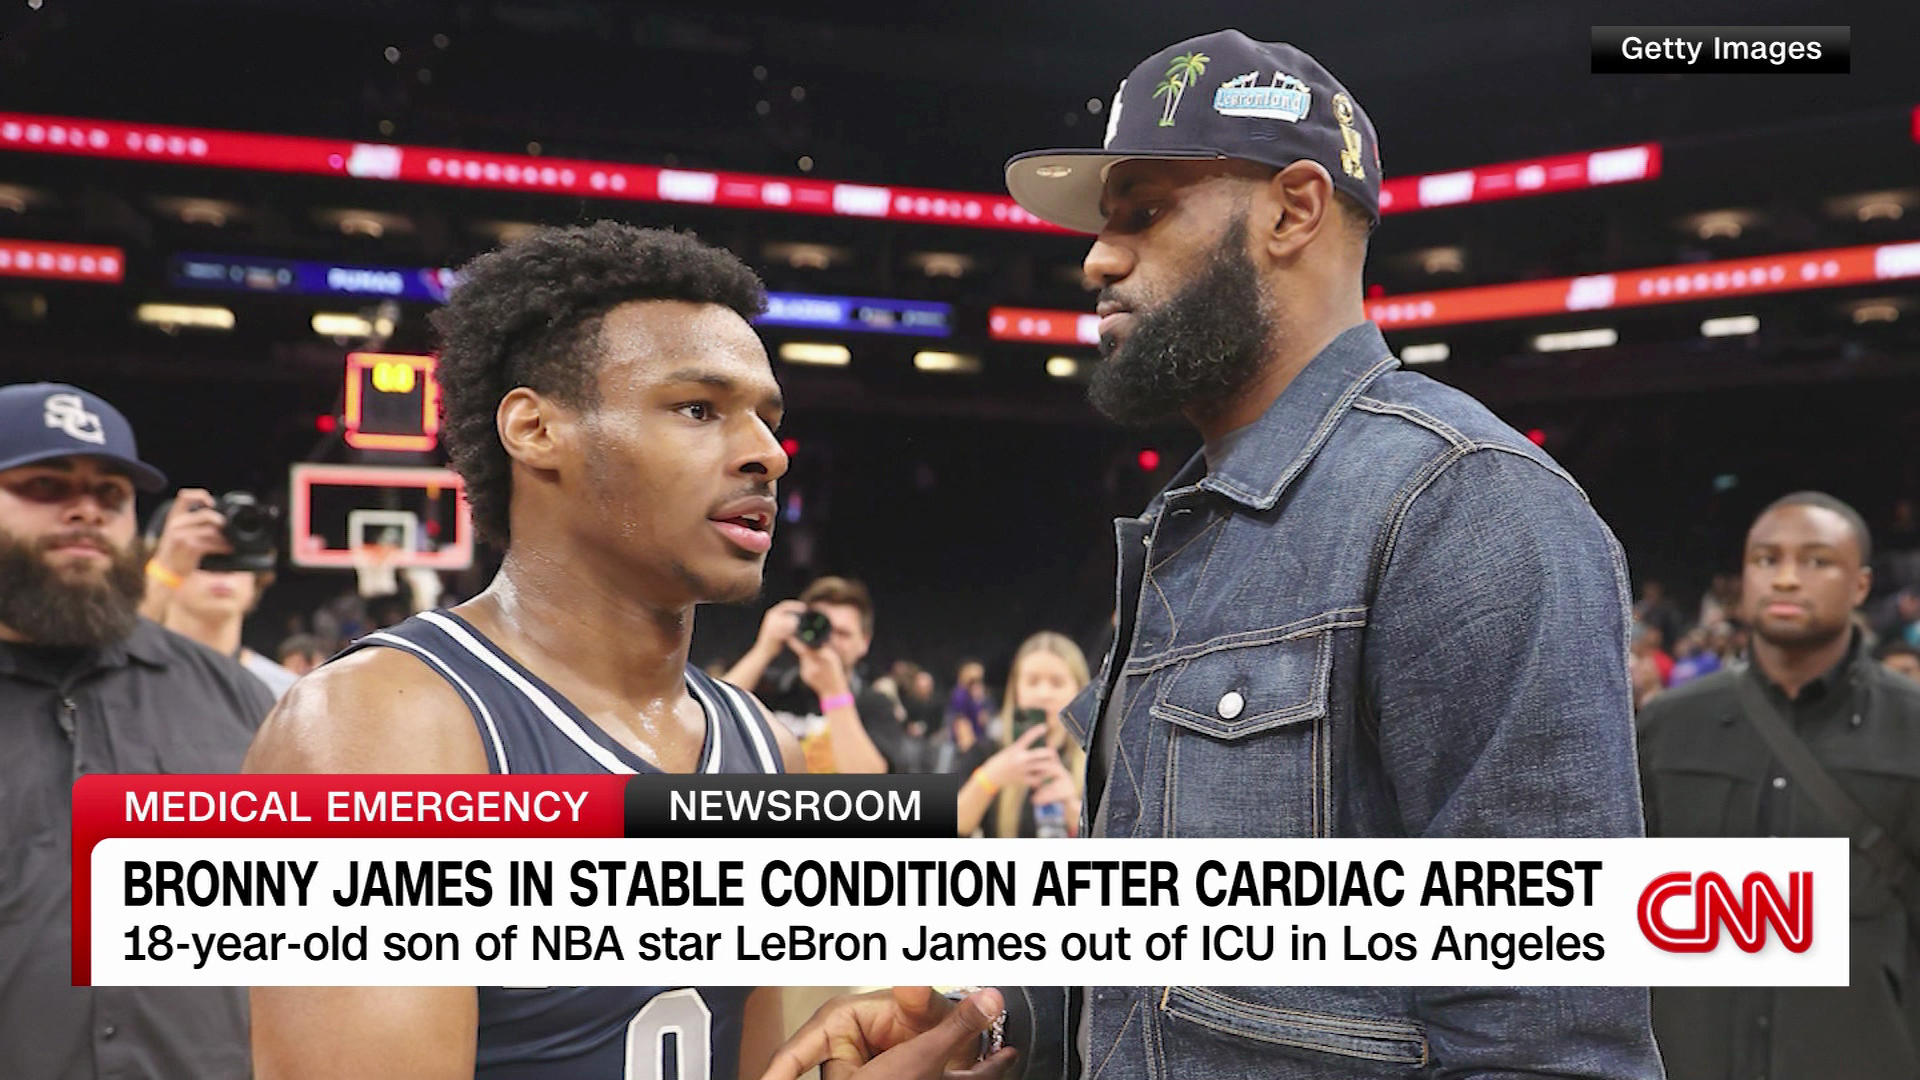 Bronny James, Son of LeBron James, Is Stable After Cardiac Arrest